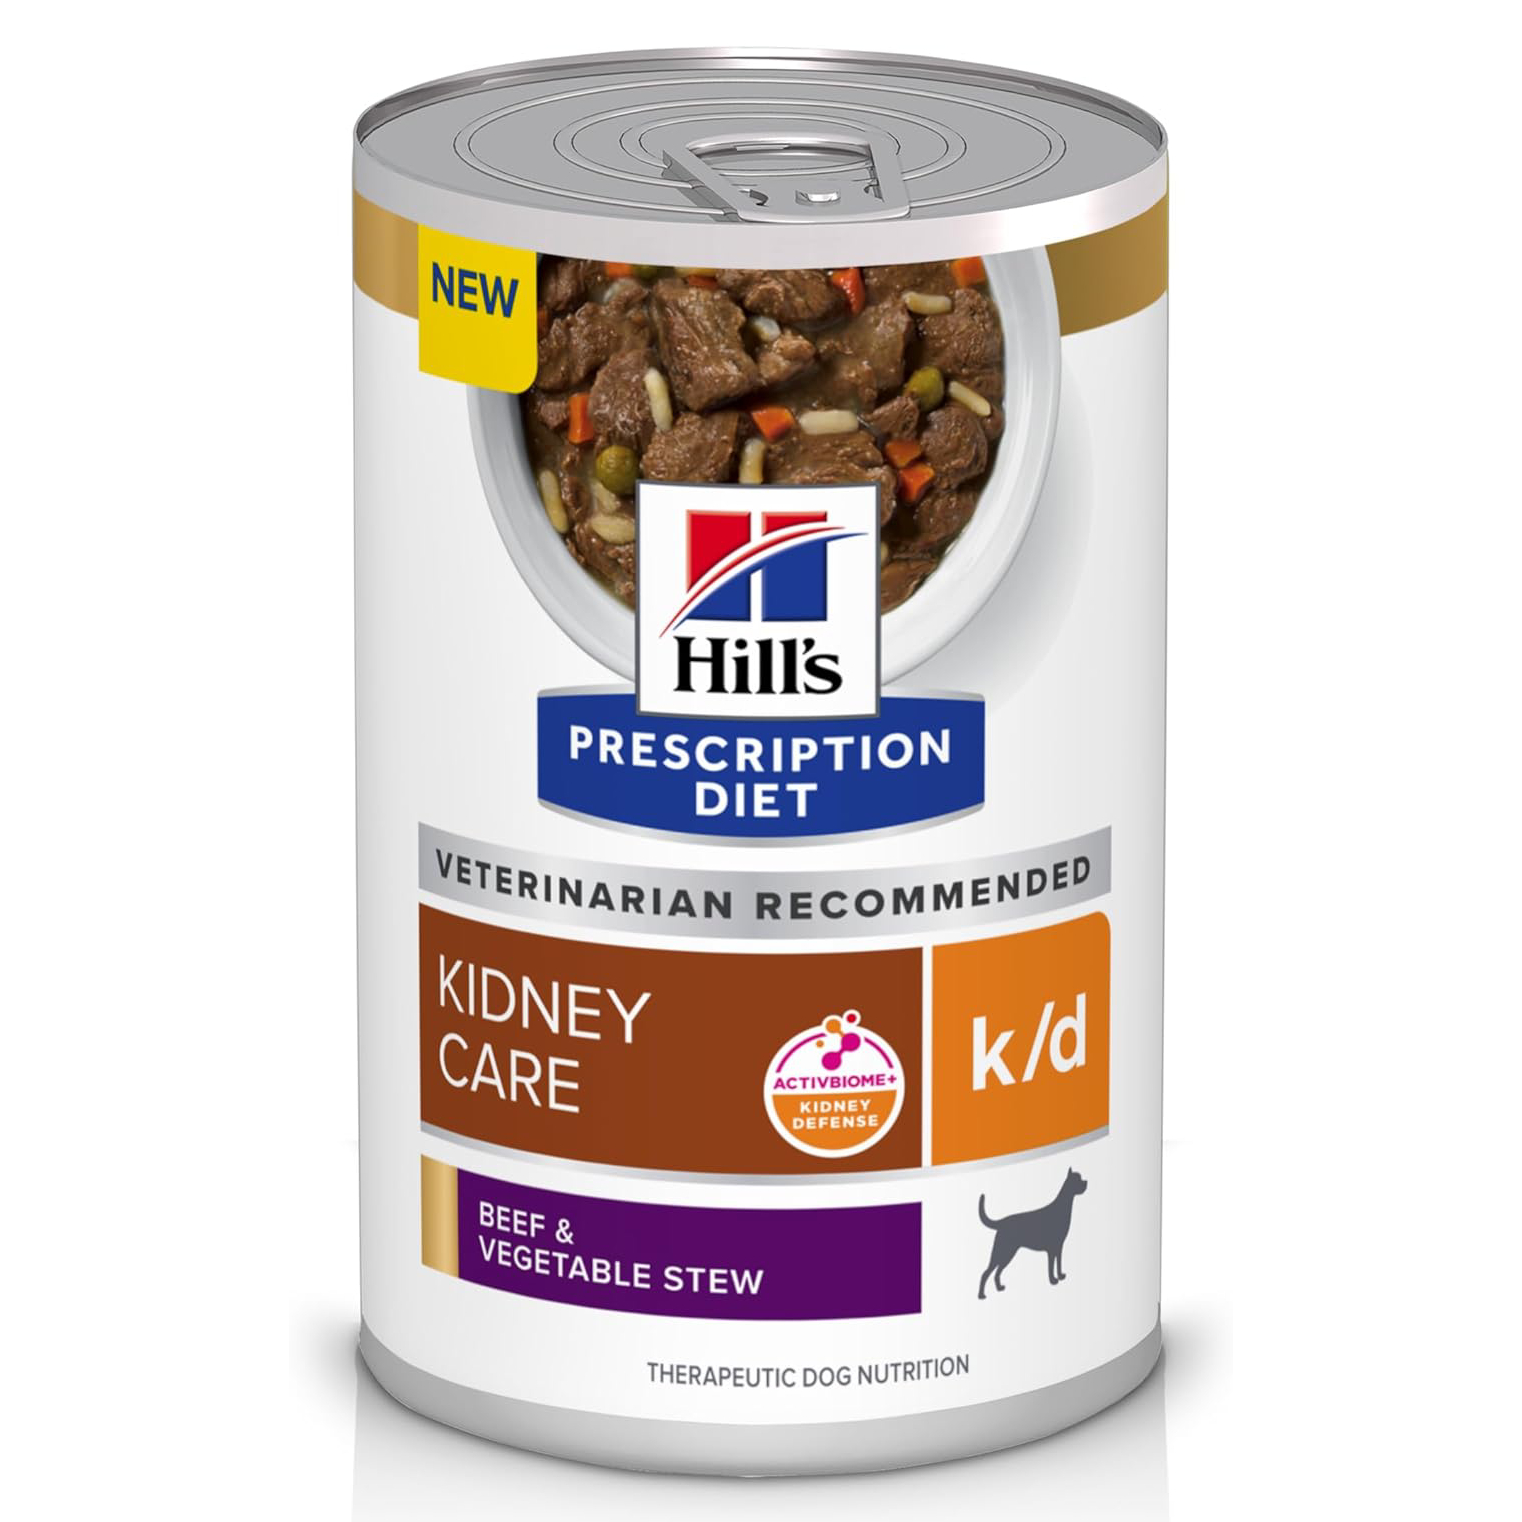 Hill’s Prescription Diet k/d Kidney Care Beef & Vegetable Stew Canned Dog Food